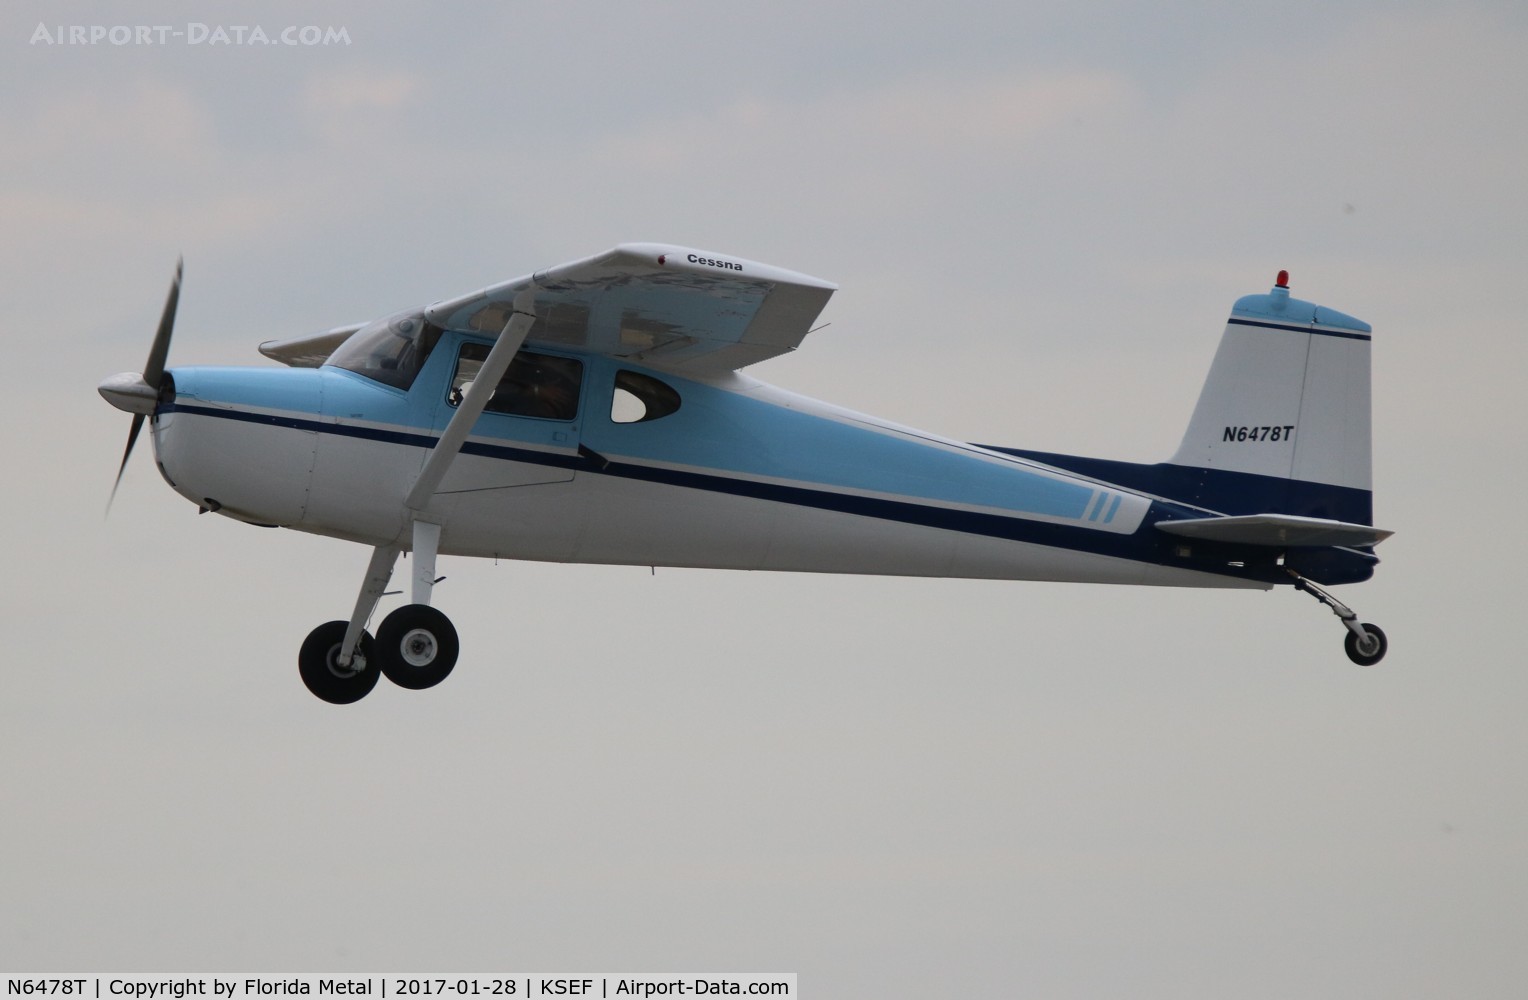 N6478T, 1960 Cessna 150 C/N 17878, Cessna 150 tail dragger